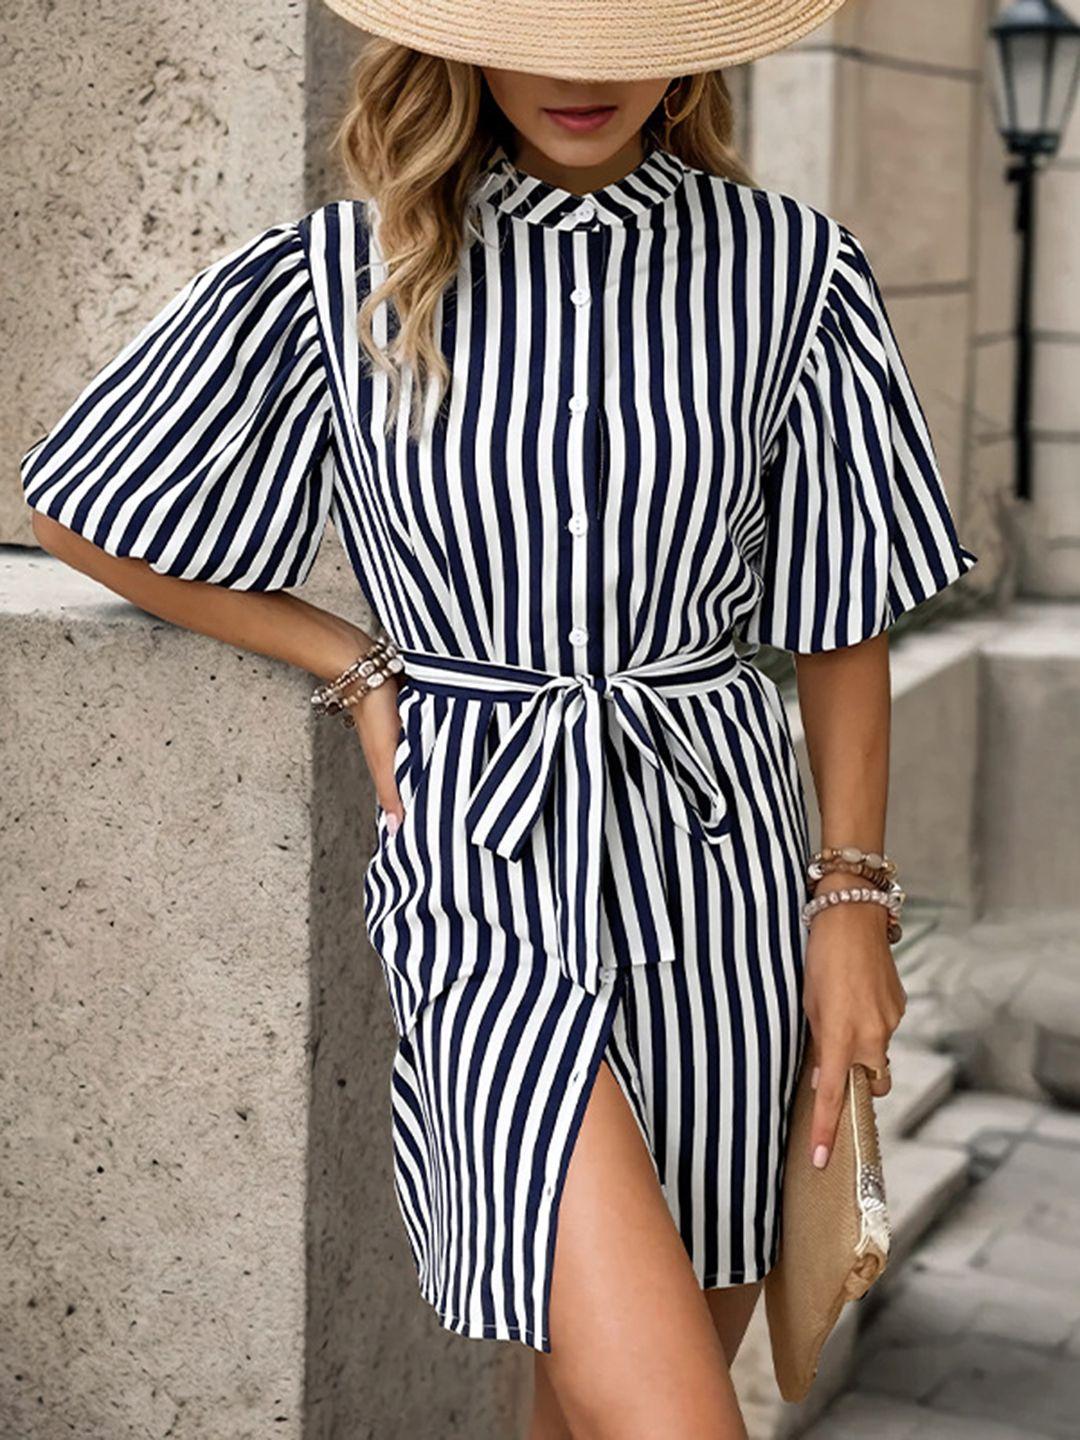 stylecast navy blue & white striped shirt midi dress